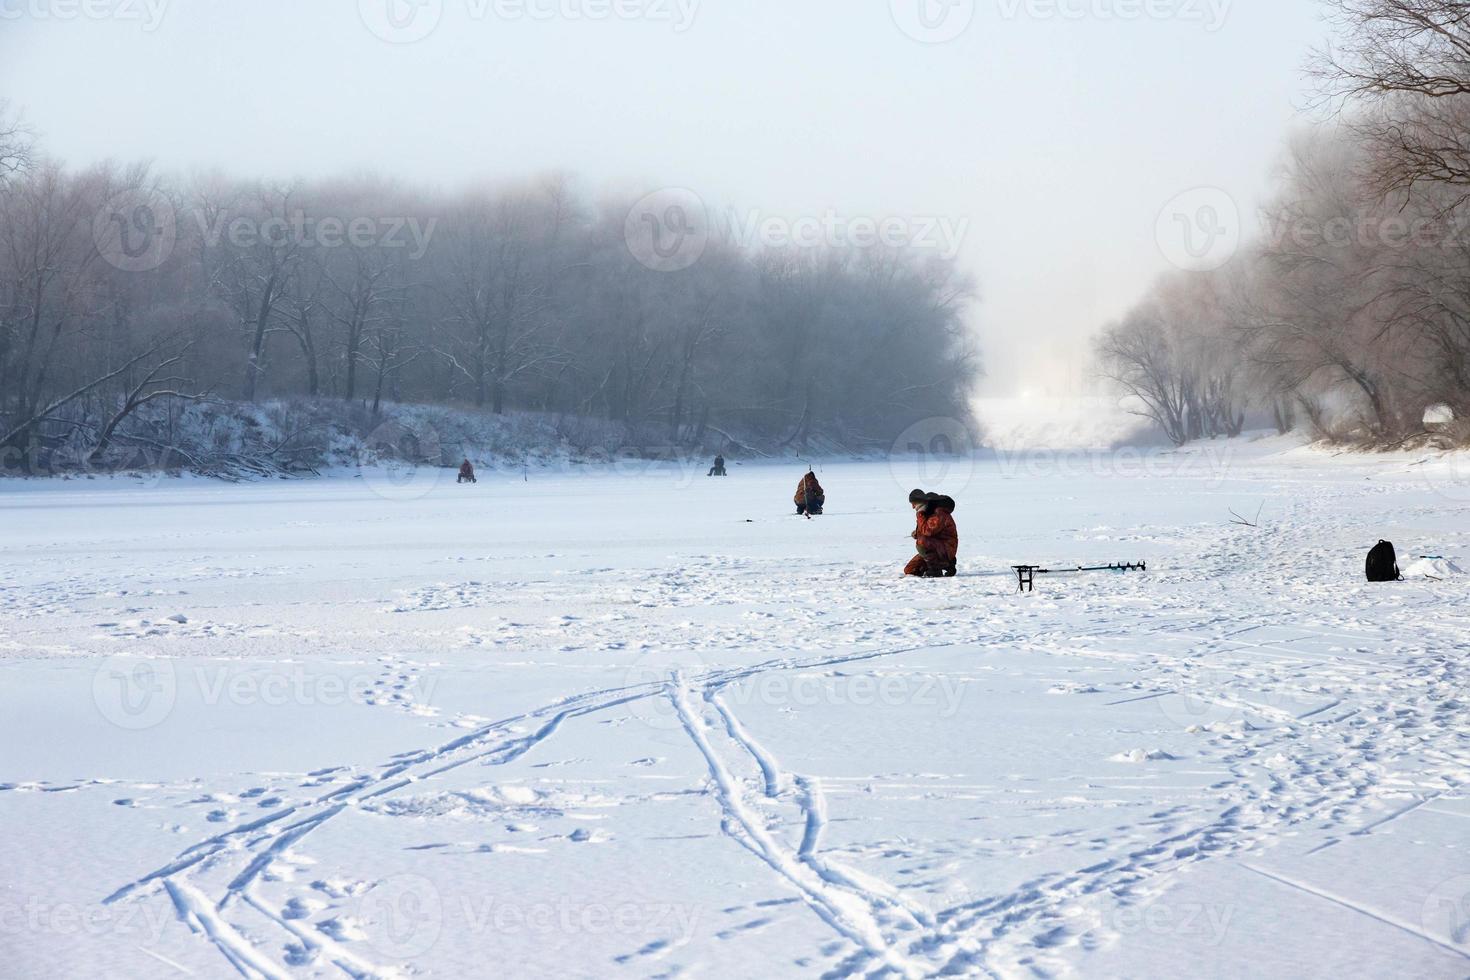 pesca en hielo con pescadores. fondo natural, temperatura fría. foto